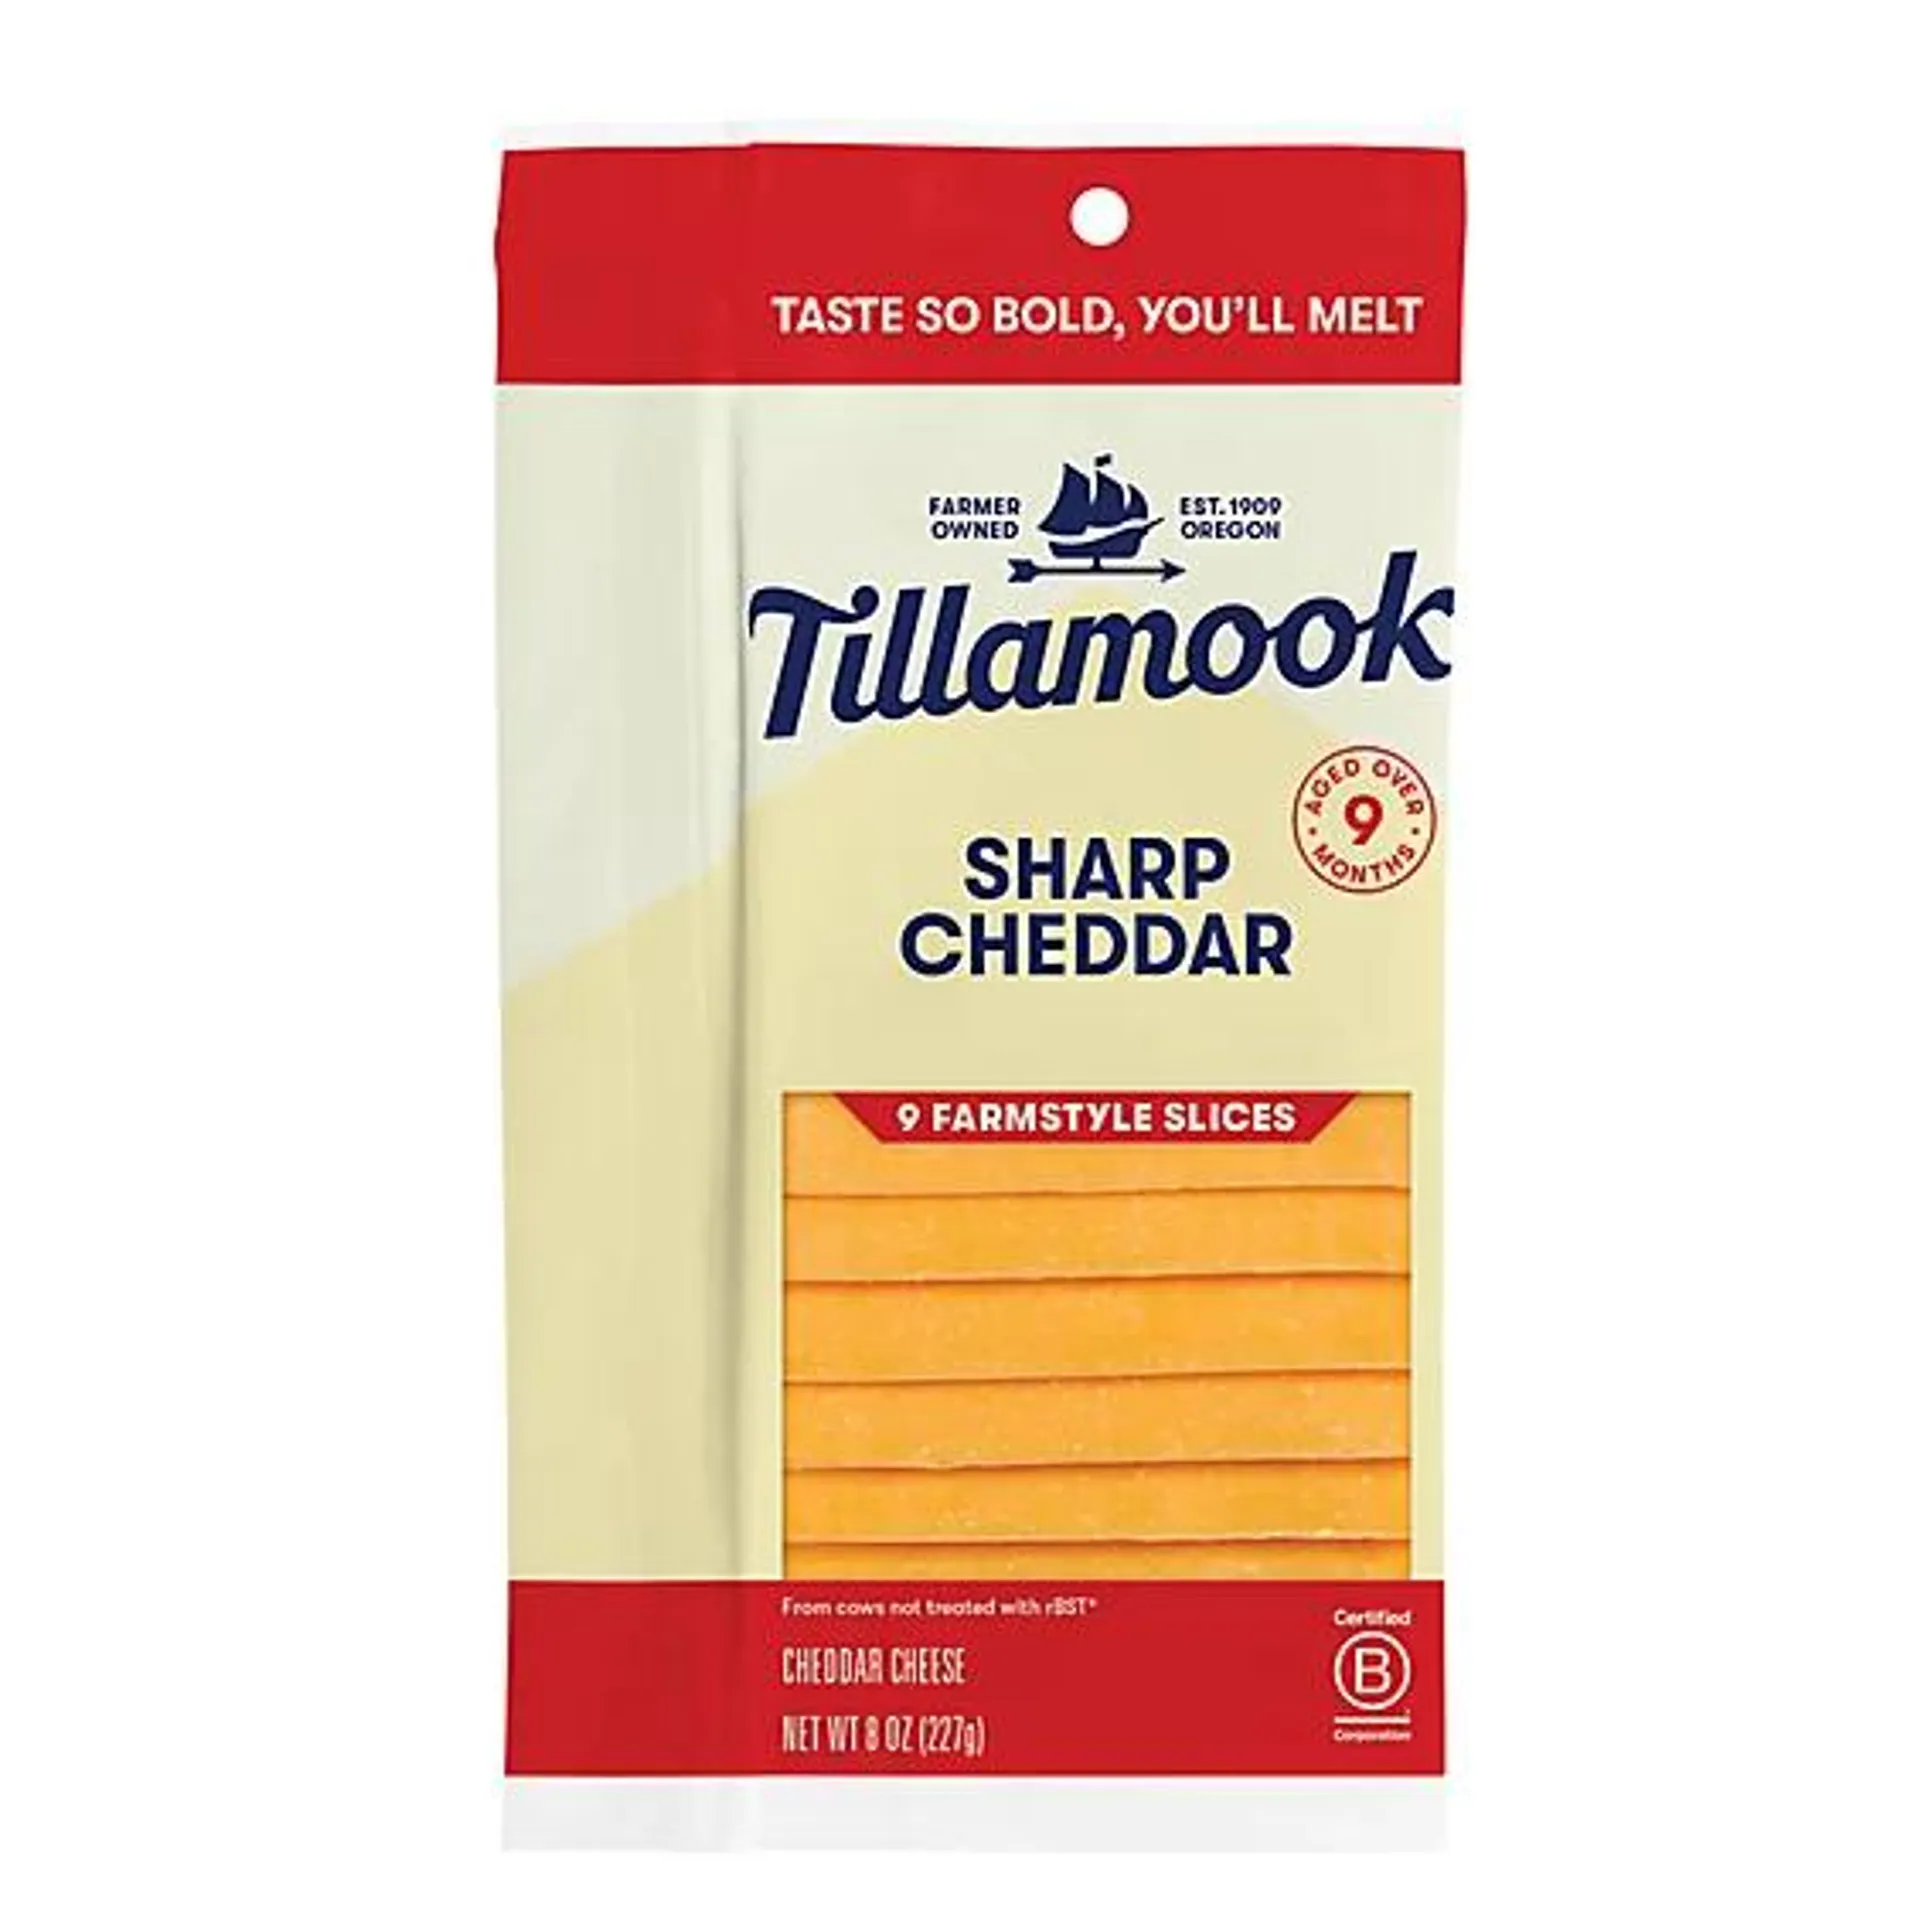 Tillamook Farmstyle Sharp Cheddar Cheese Slices 9 Count - 8 Oz